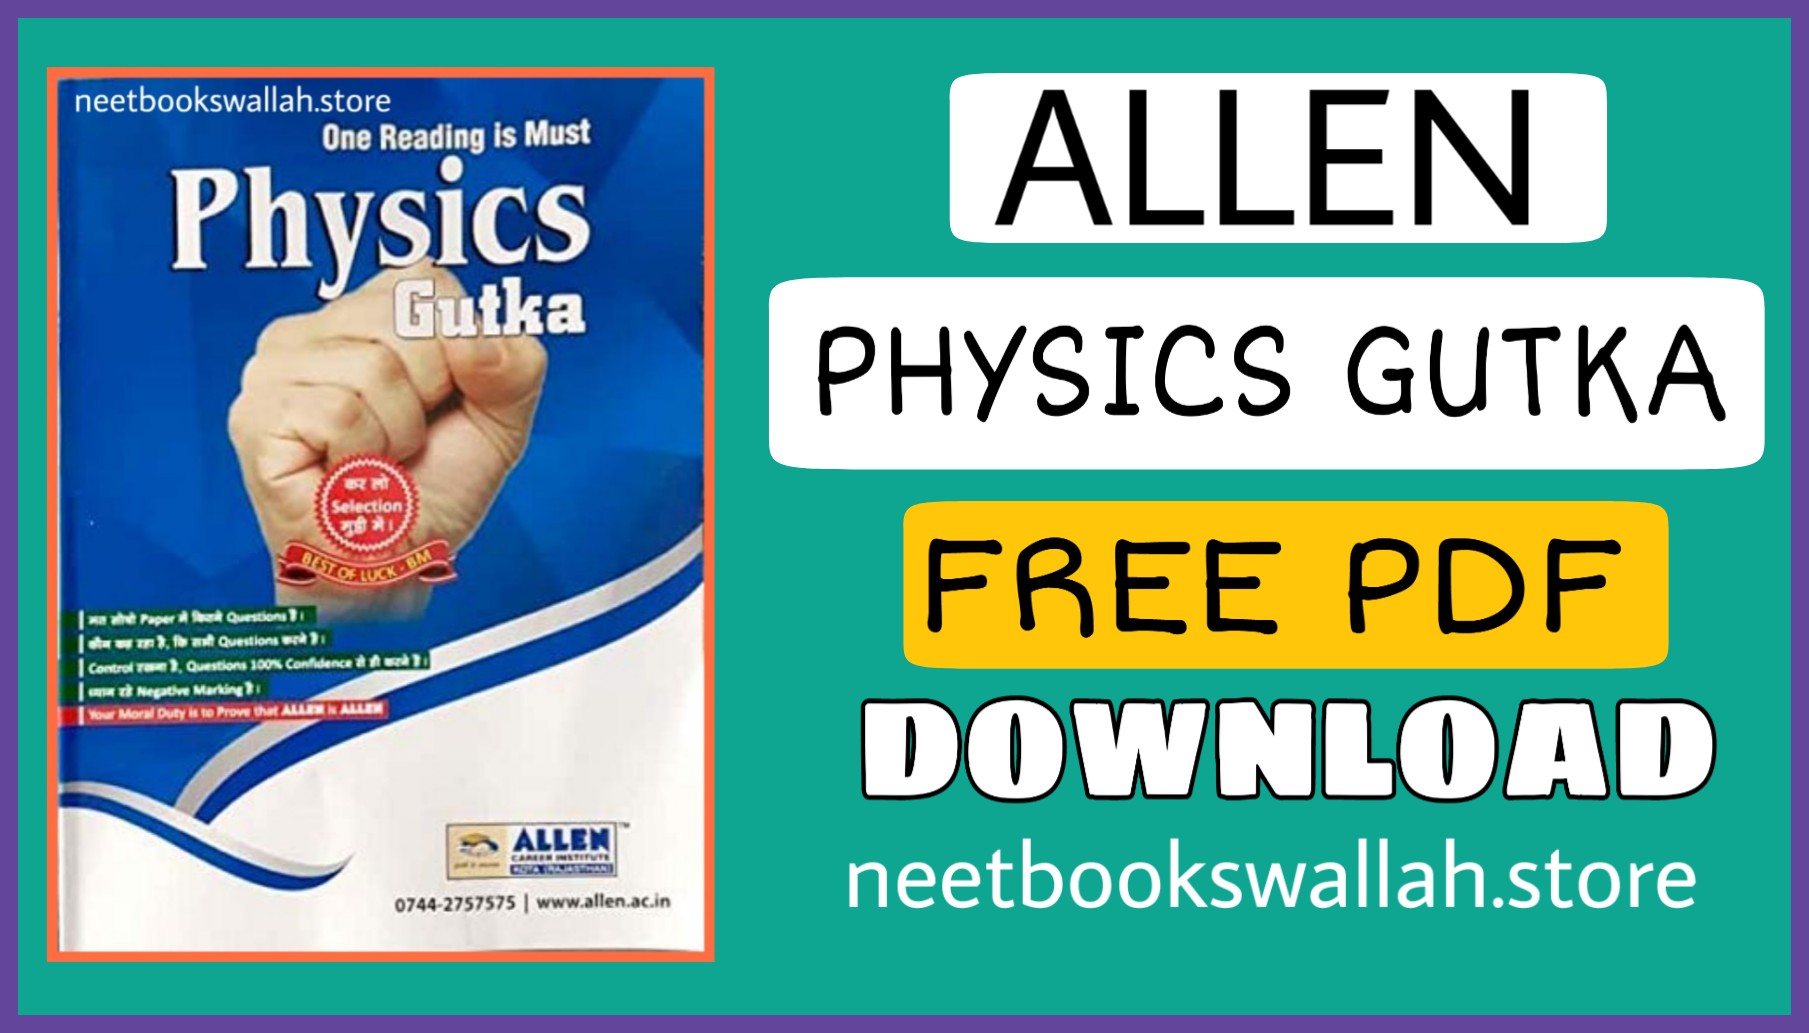 Allen Physics Gutka PDF Download, allen kota Physics gutka for neet, gutka for neet free download, allen gutka pdf download, allen gutka for neet/jee latest edition neet books wallah